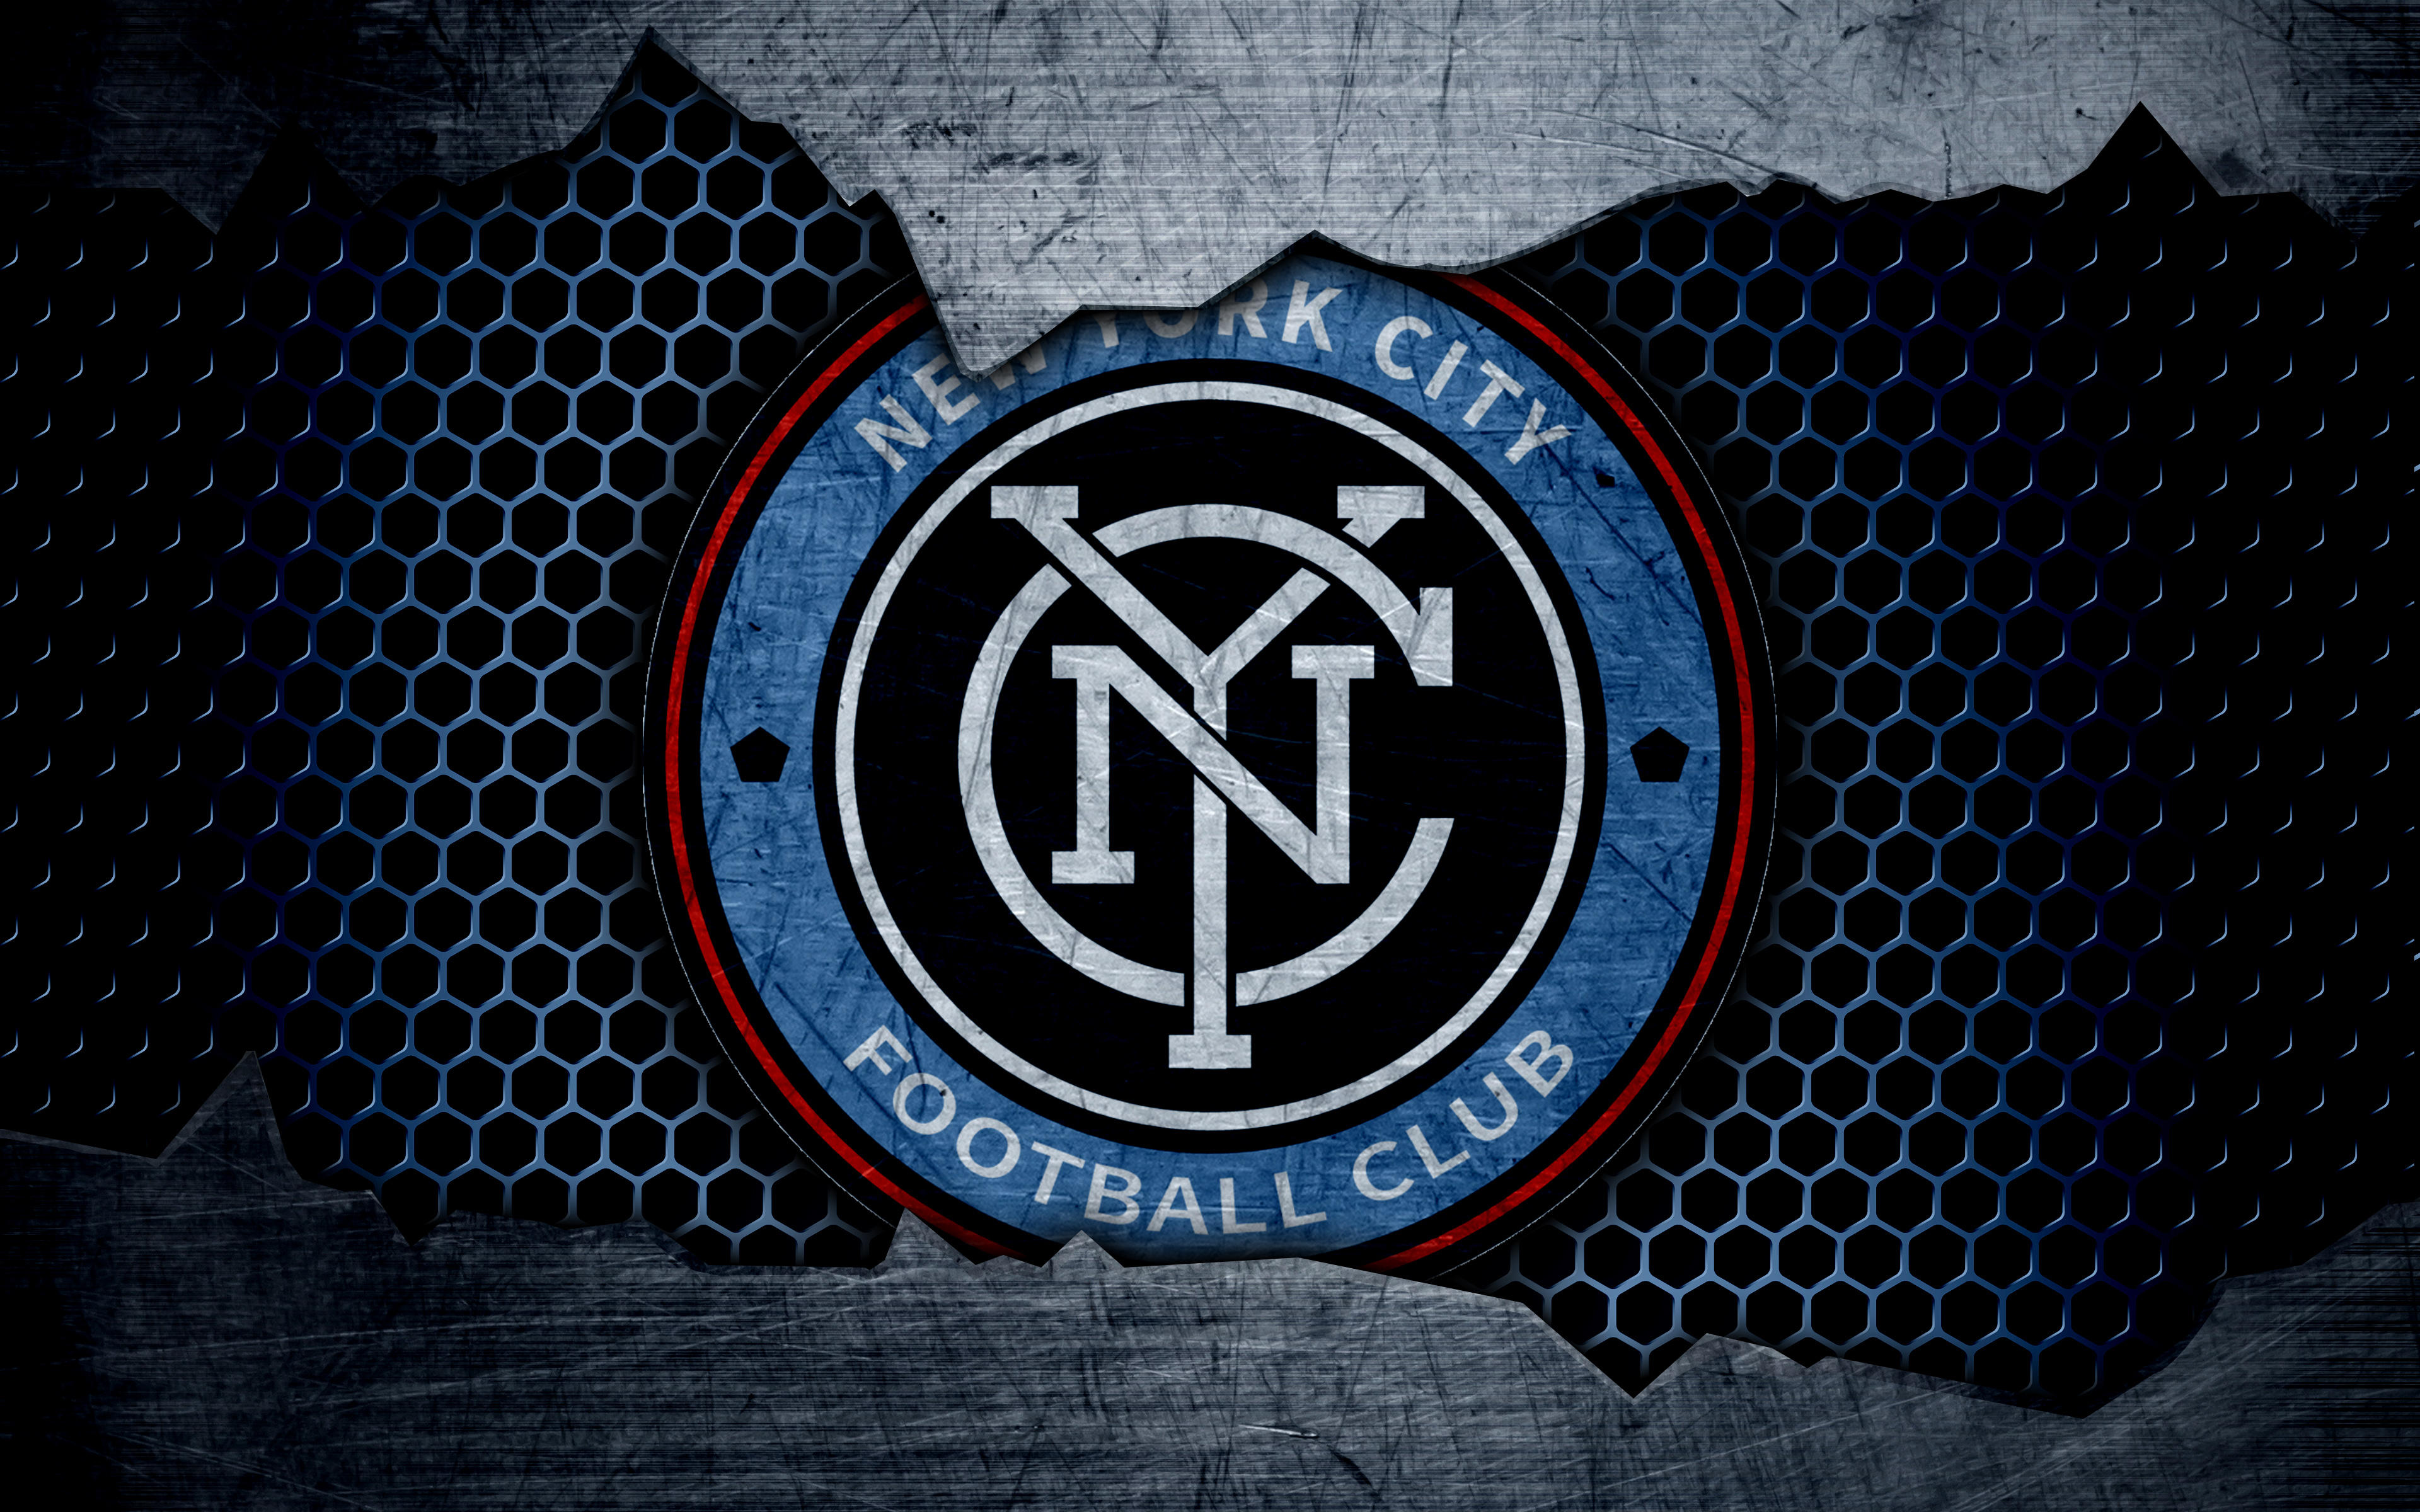 Logo Mls New York City Fc Soccer 3840x2400